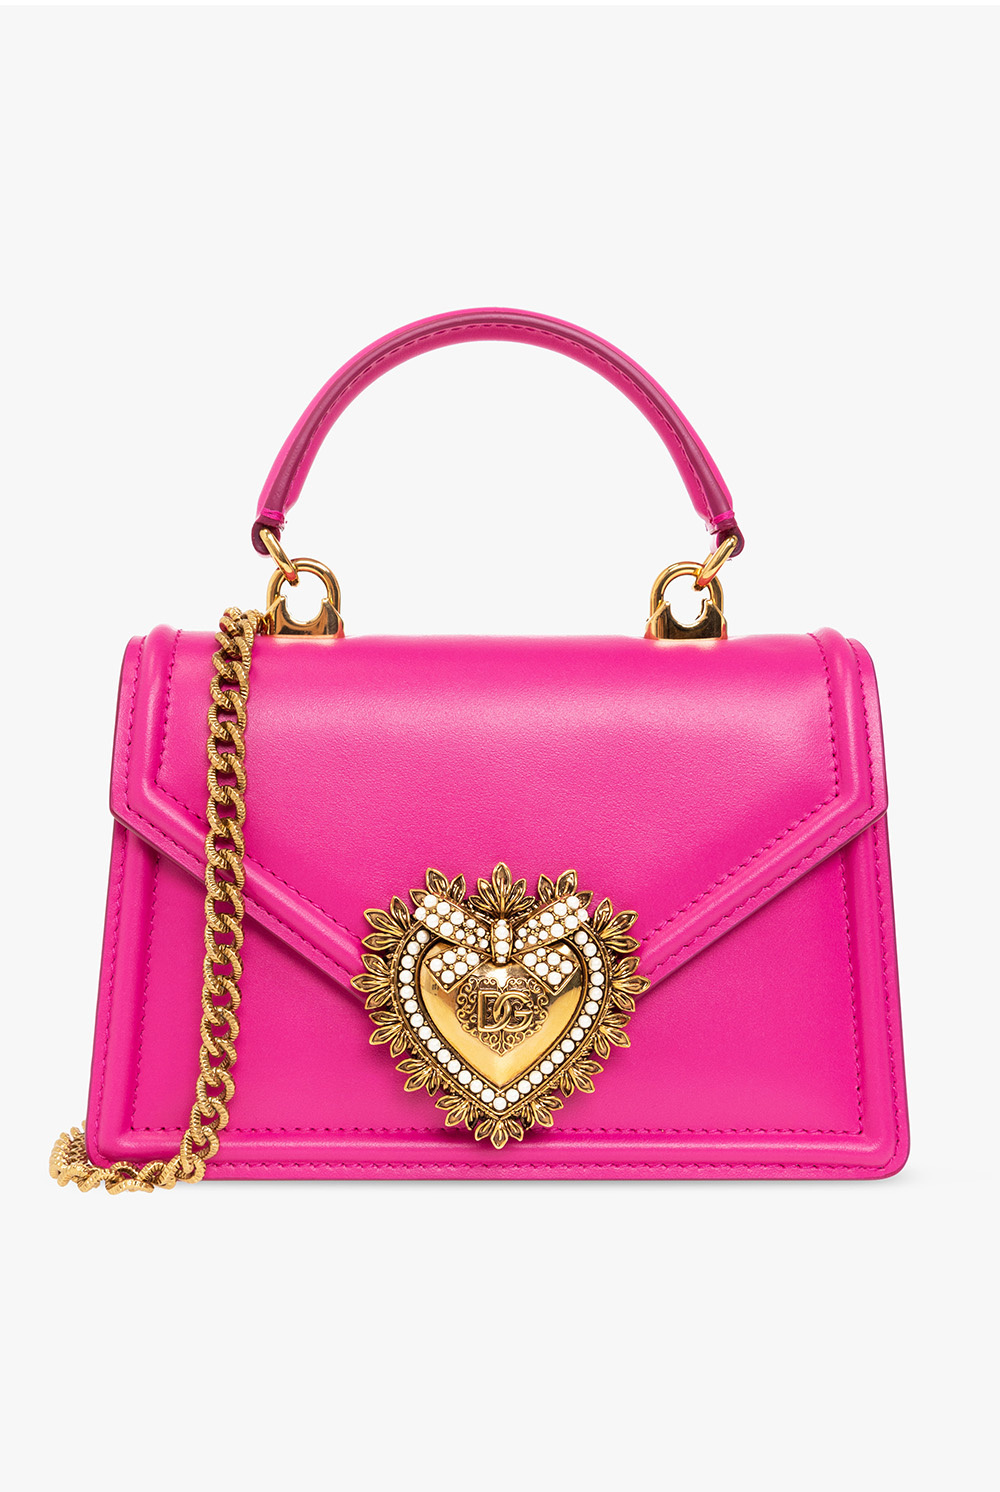 Dolce & Gabbana Bags for Women